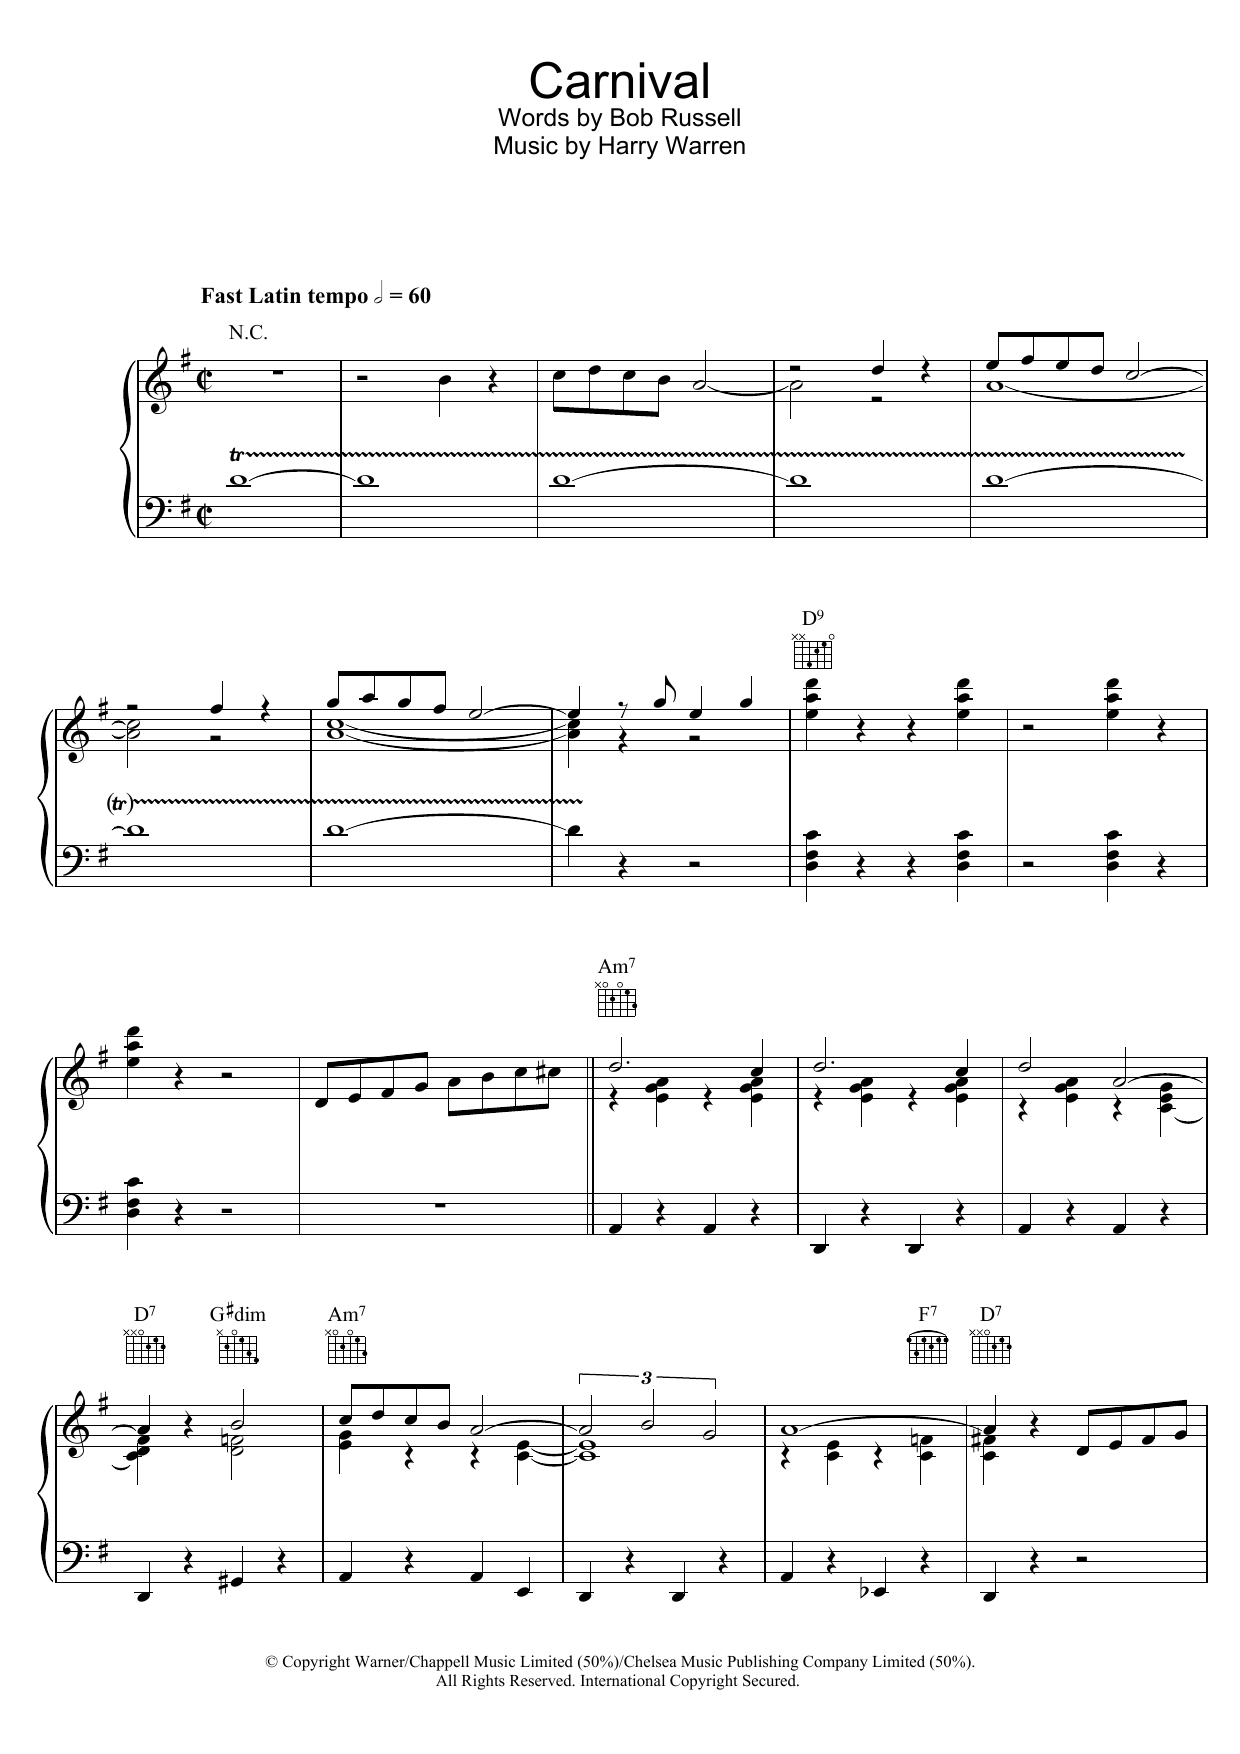 Harry Warren "Carnival" Sheet Music Notes Download Printable PDF